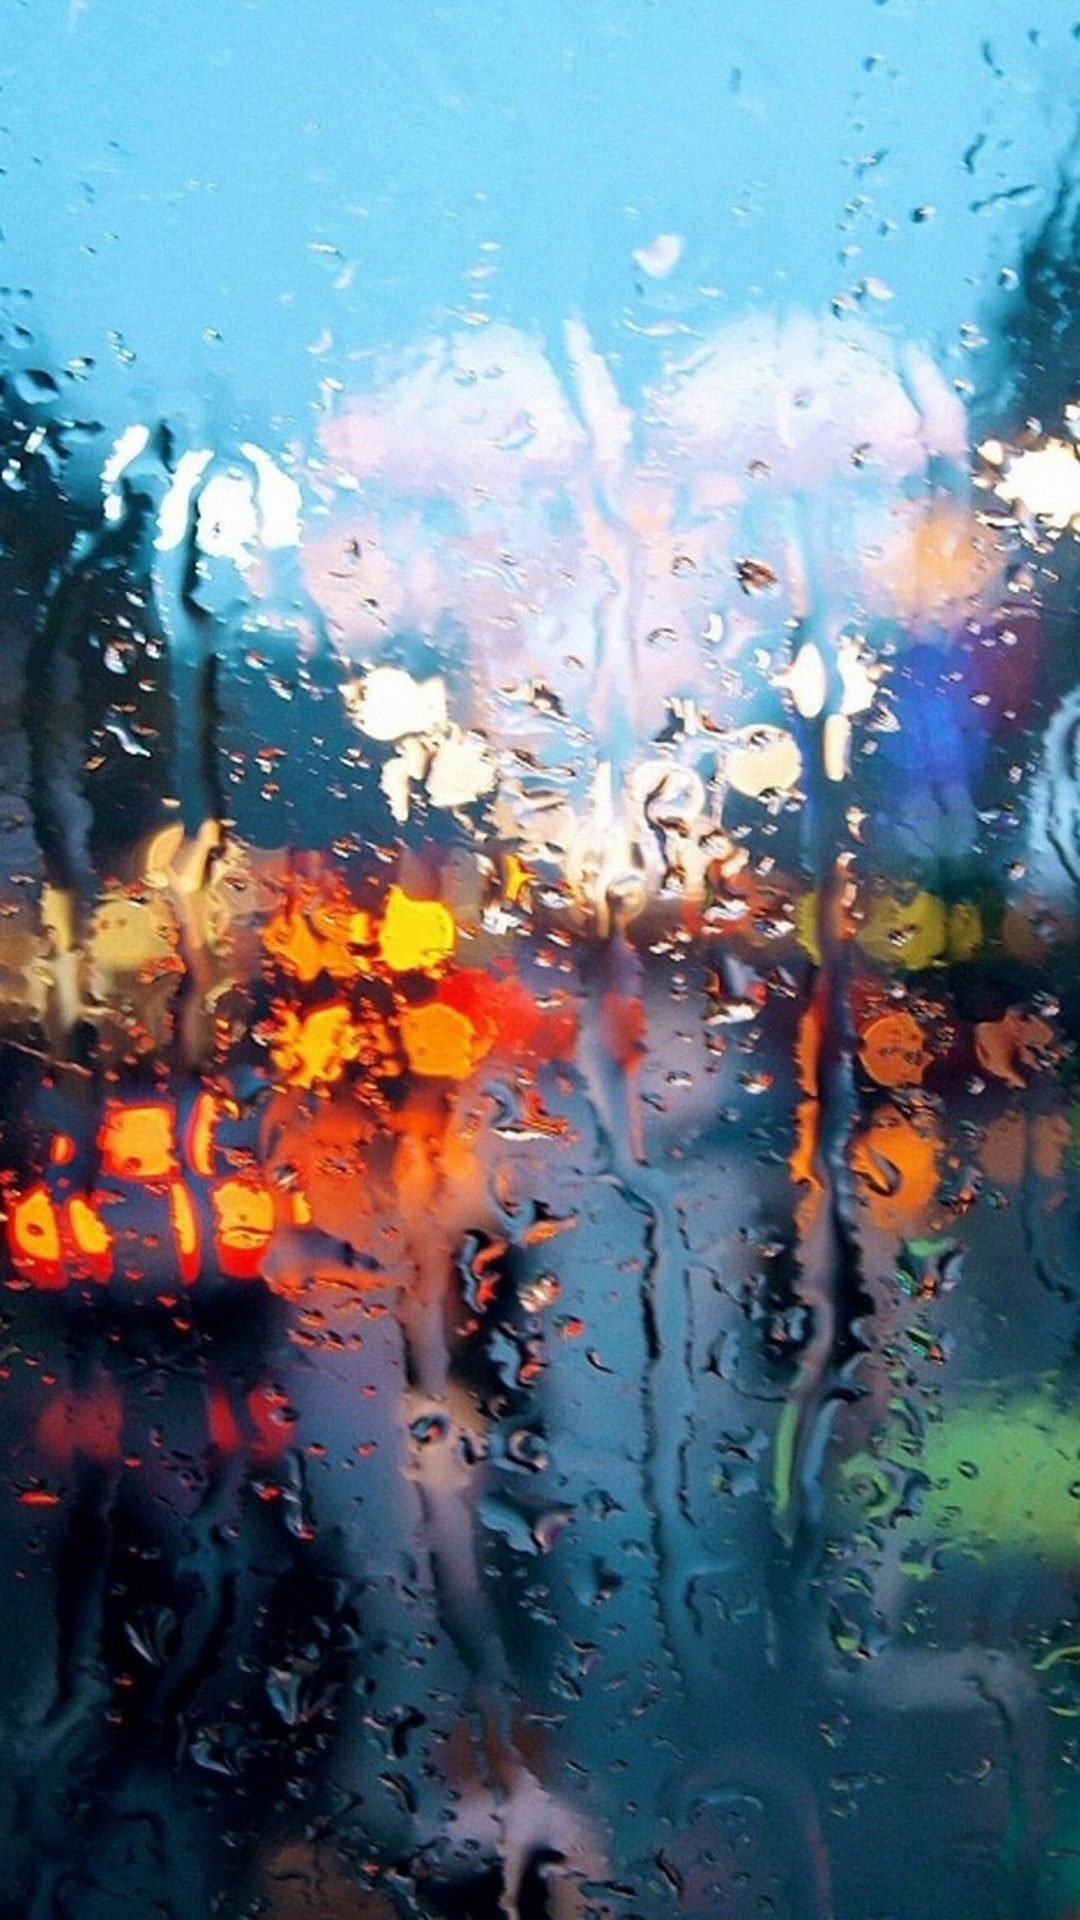 View of the rain